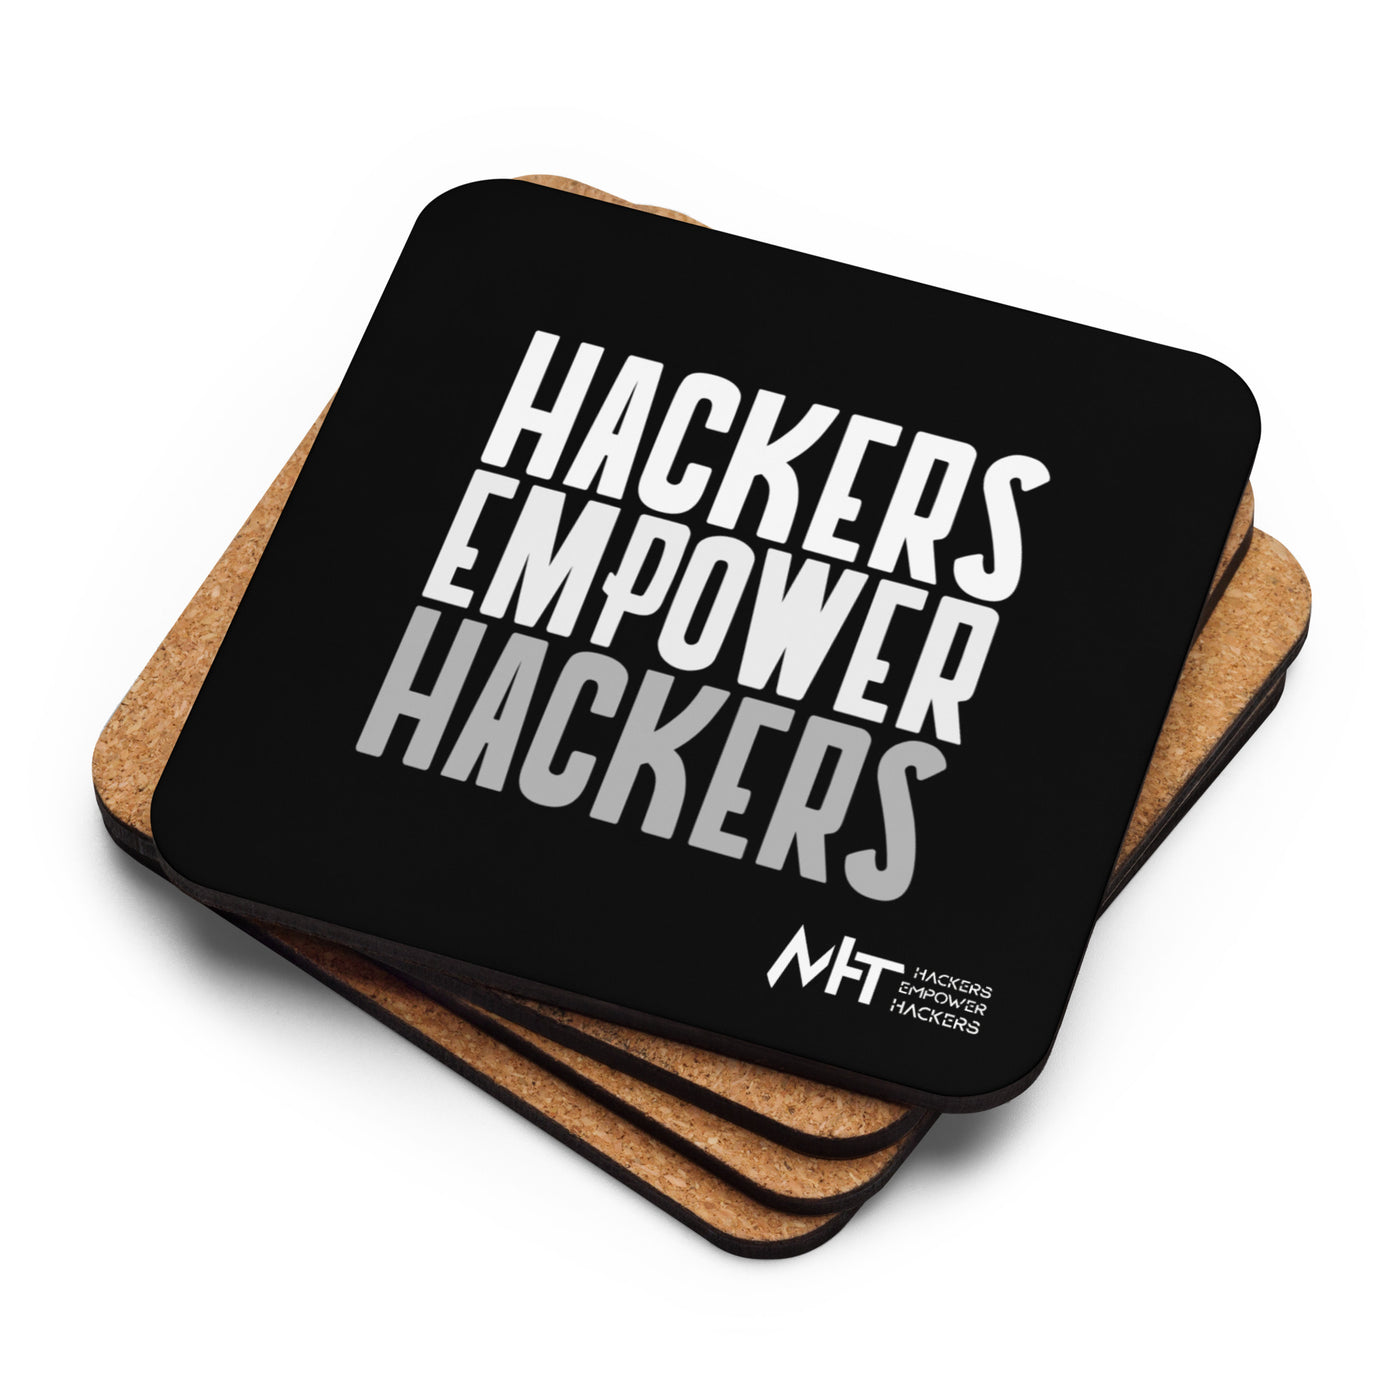 Hackers Empower Hackers - Cork-back coaster